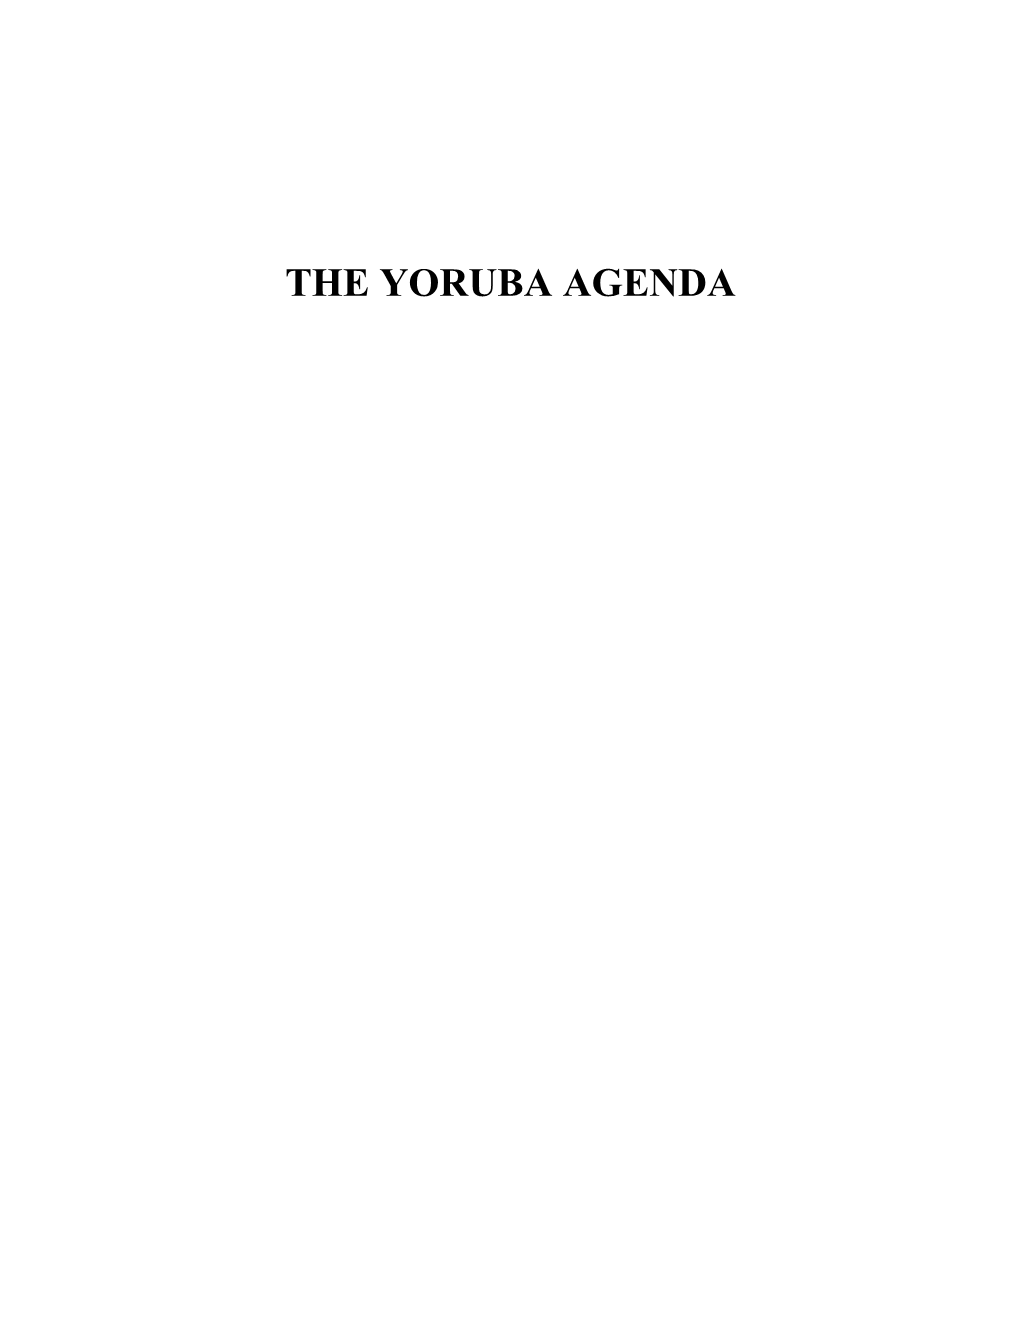 The Yoruba Agenda